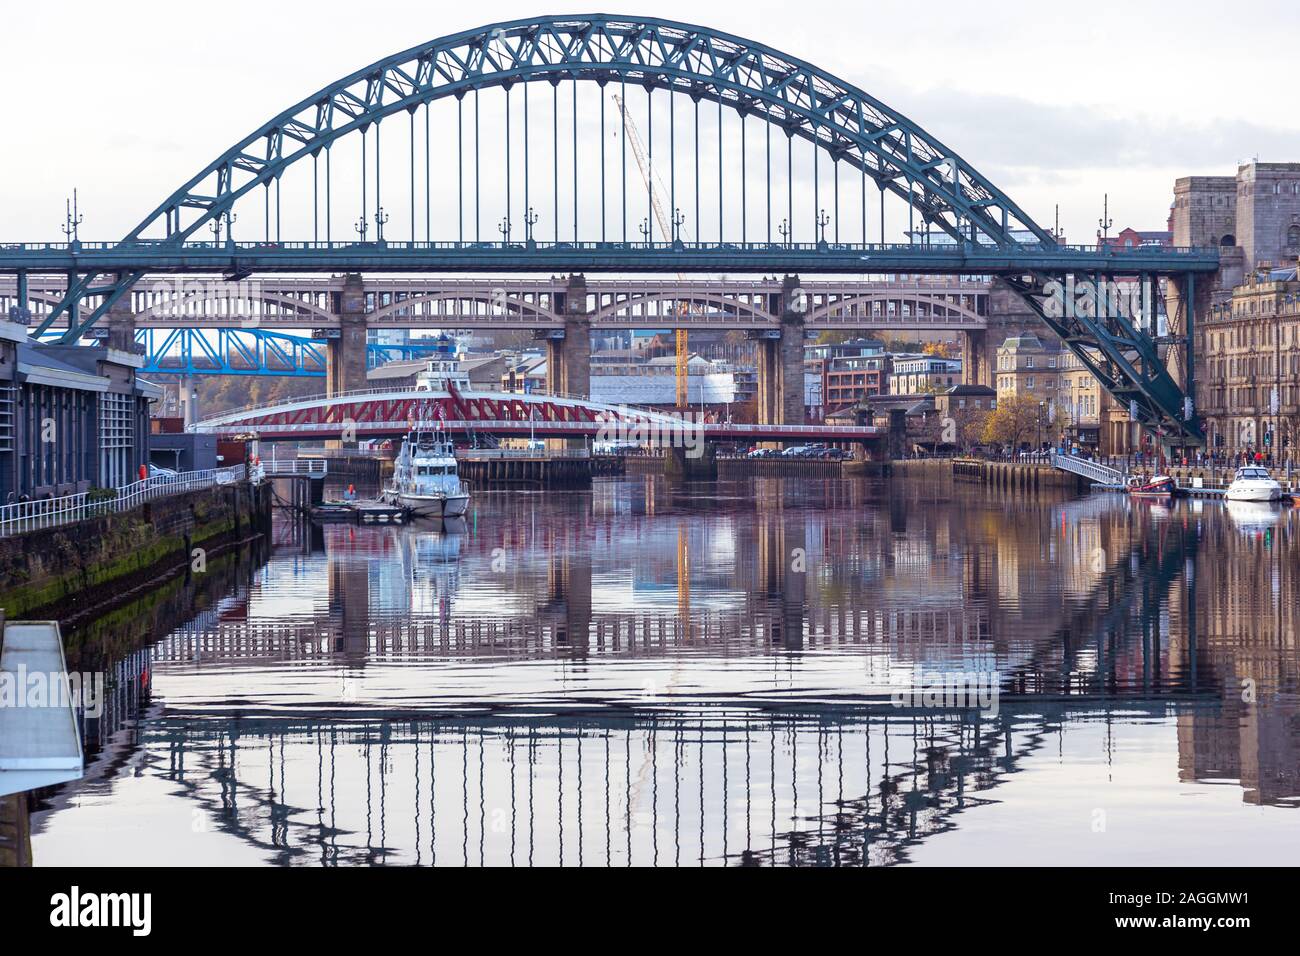 Newcastle, England - November 09 2019: Tyne Bridge mirrored in the River Tyne, Newcastle, UK with Swing, Queen Elizabeth IIand High Level bridge in the background Stock Photo